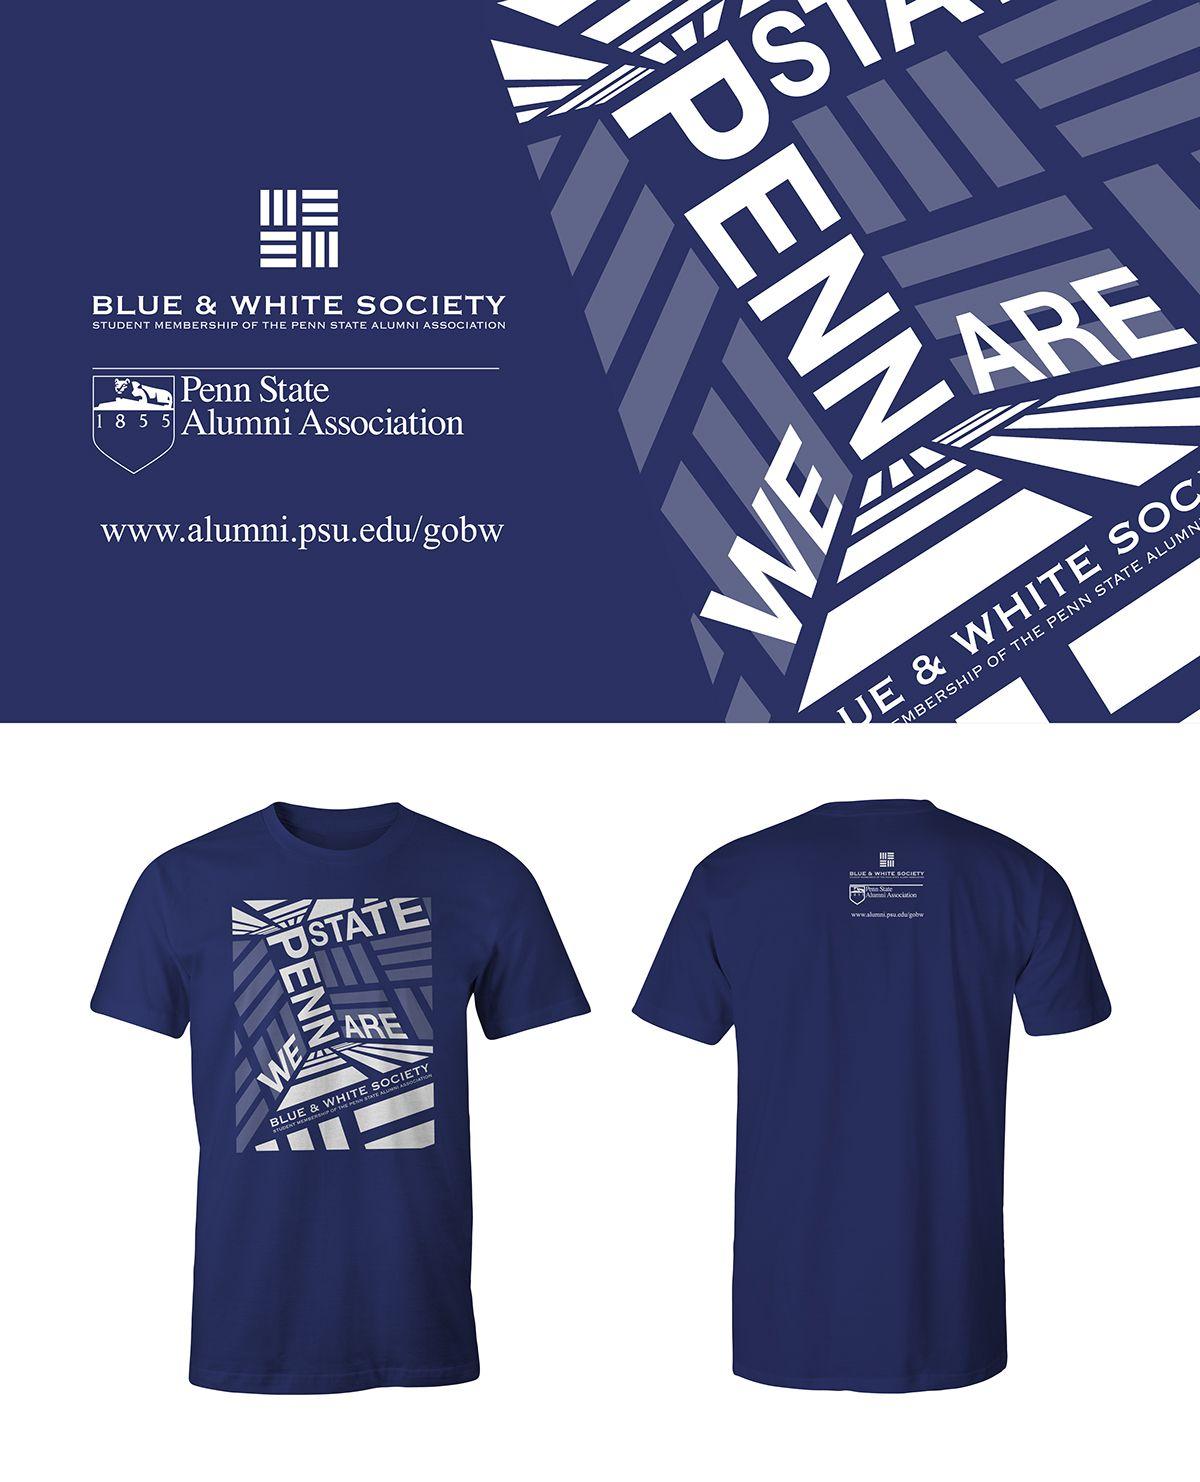 Blue and White Society Logo - Blue & White Society t-shirt on Behance